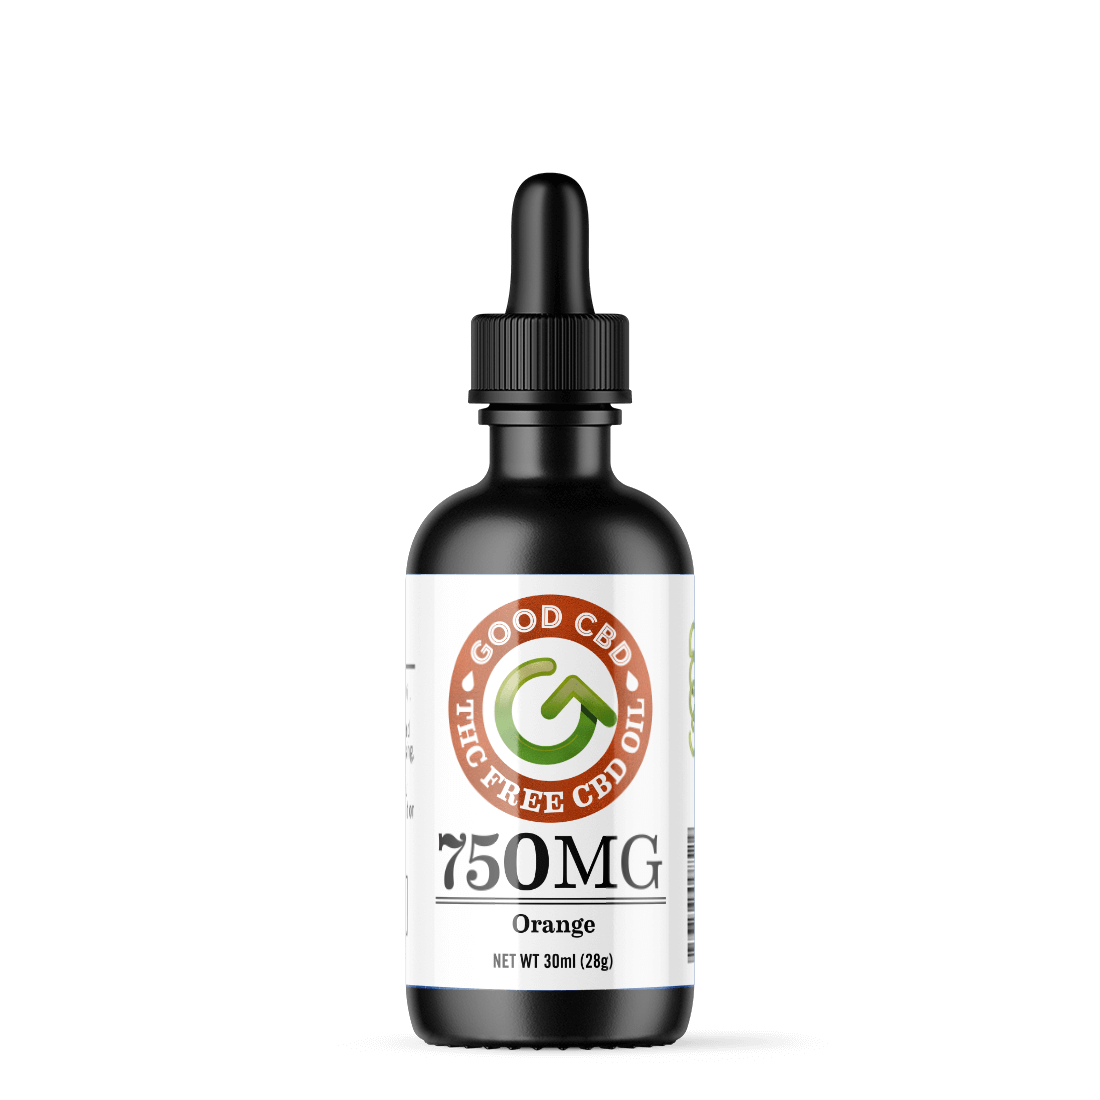 750mg CBD Oil THC free, orange flavor CBD oil - Good CBD Online Store